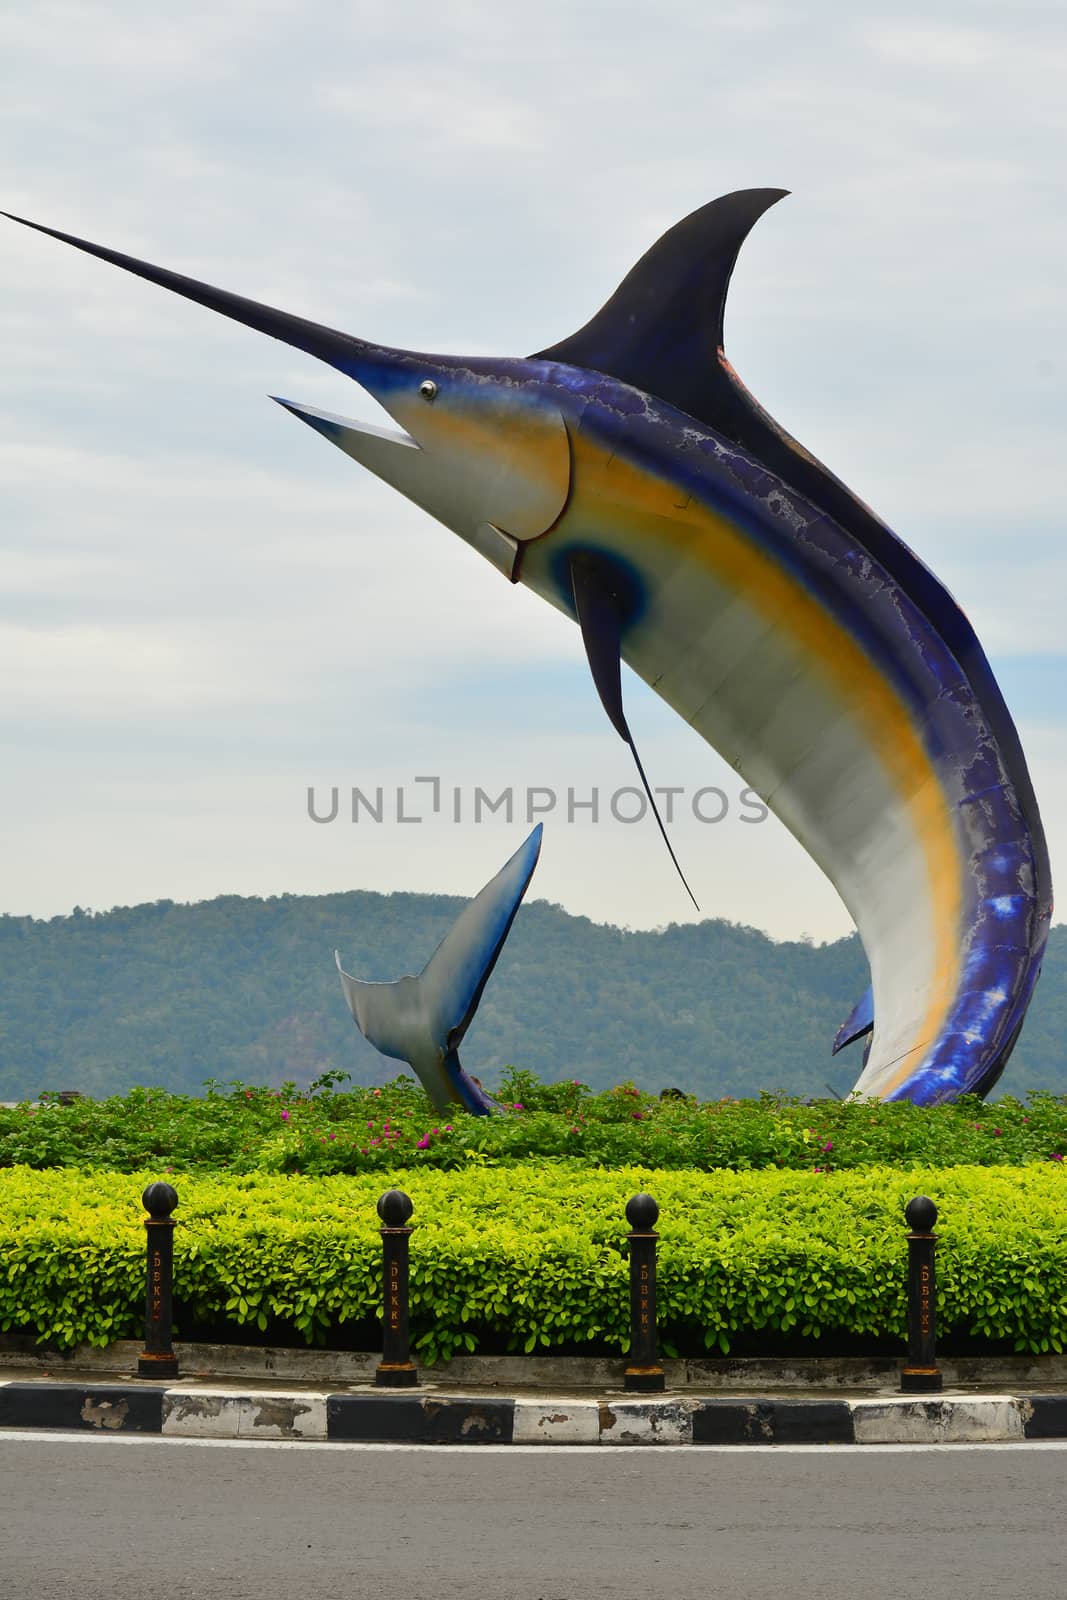 KOTA KINABALU, MY - JUNE 21: Swordfish statue on June 21, 2016 in Kota Kinabalu, Malaysia. Swordfish statue is located on a small roundabout, next to the Hyatt Regency Kinabalu, in Kota Kinabalu.